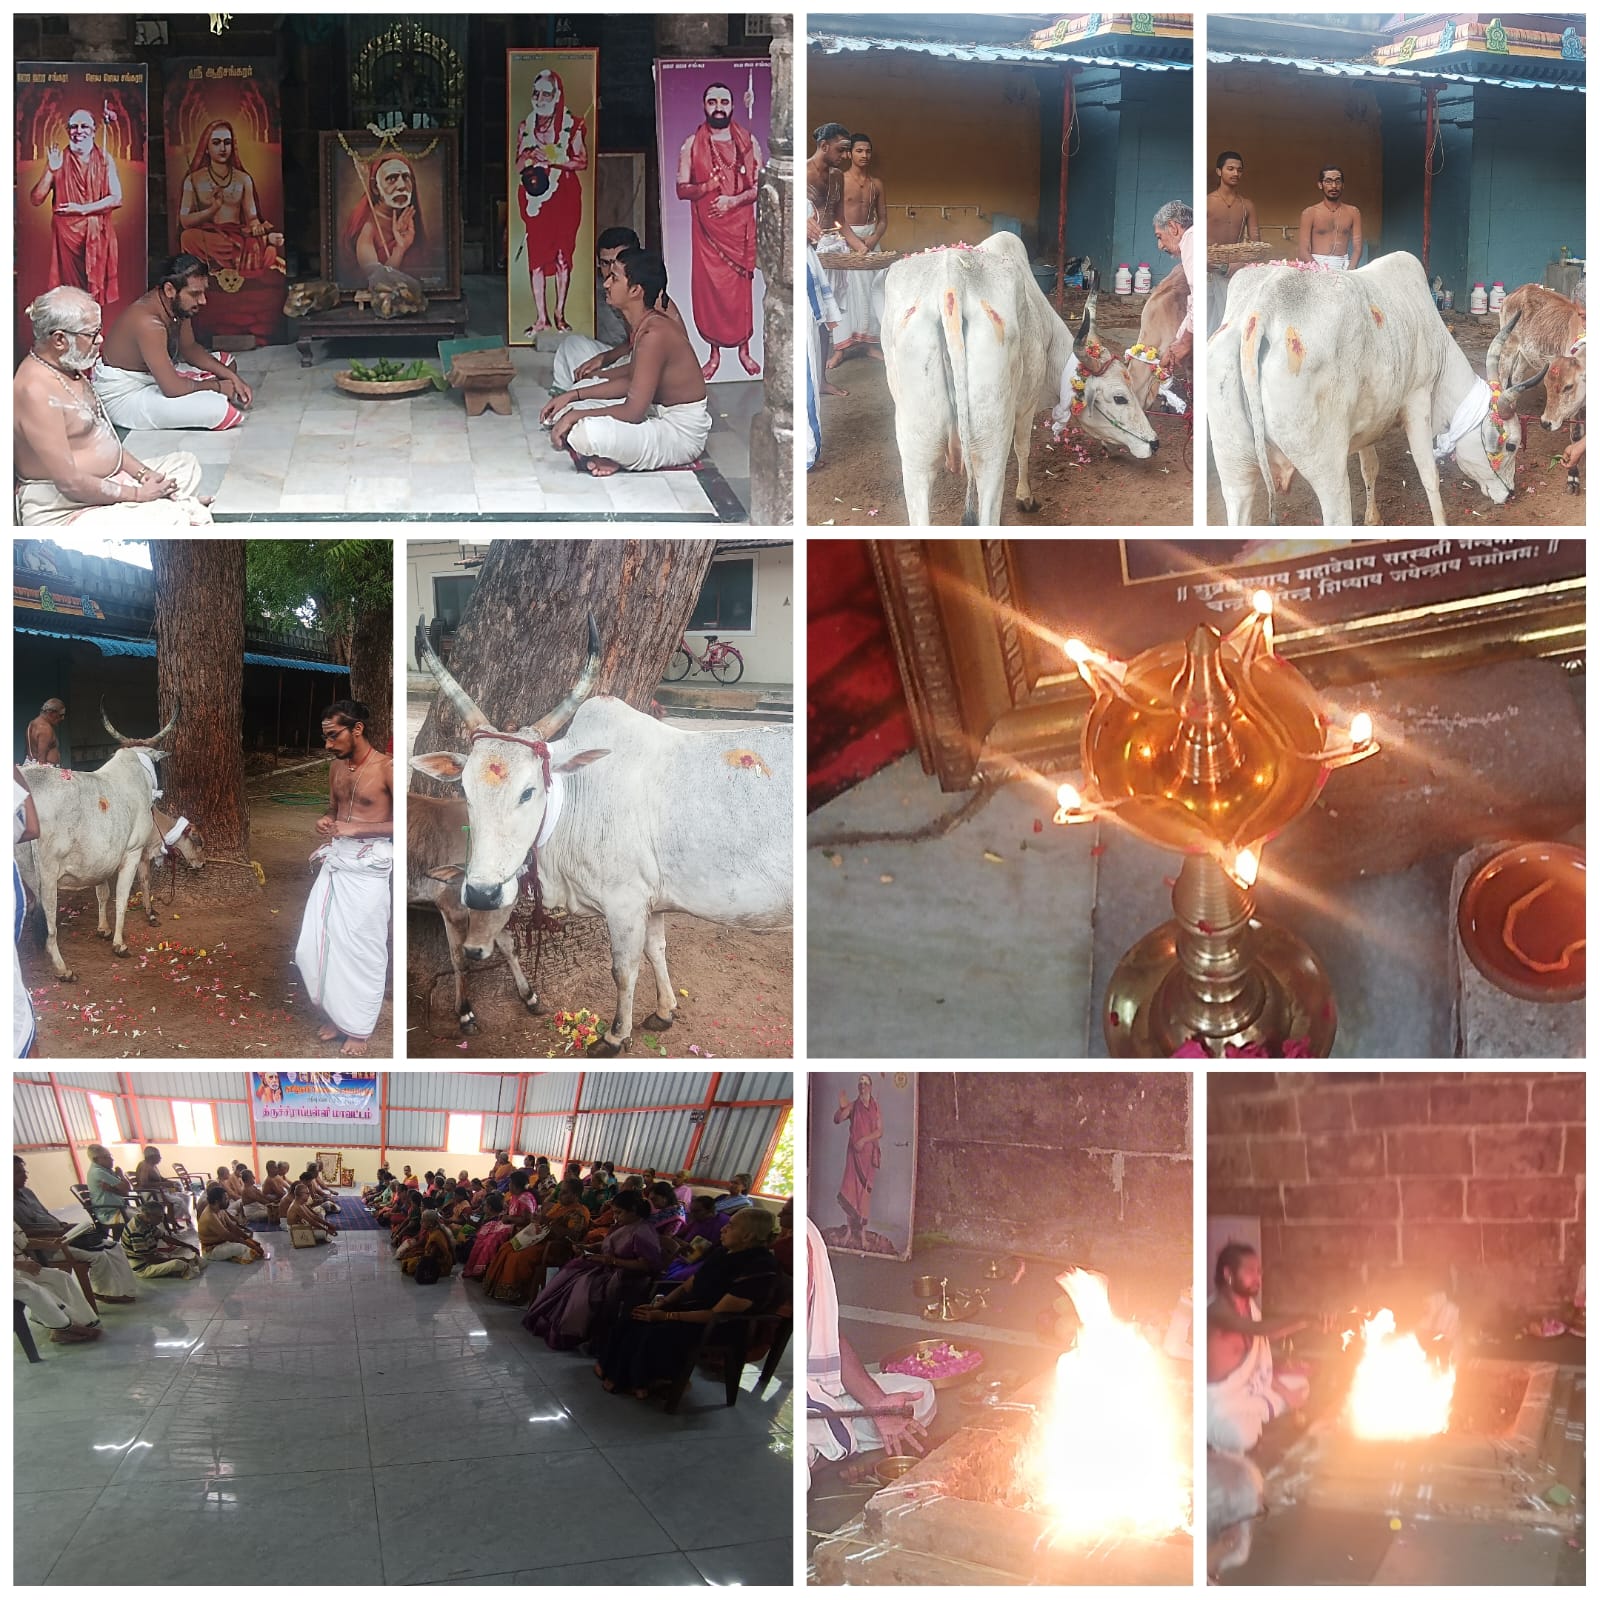 131st Jayanti Mahotsavam of Pujya Mahaswamigal celebrated at Tiruvanaikovil